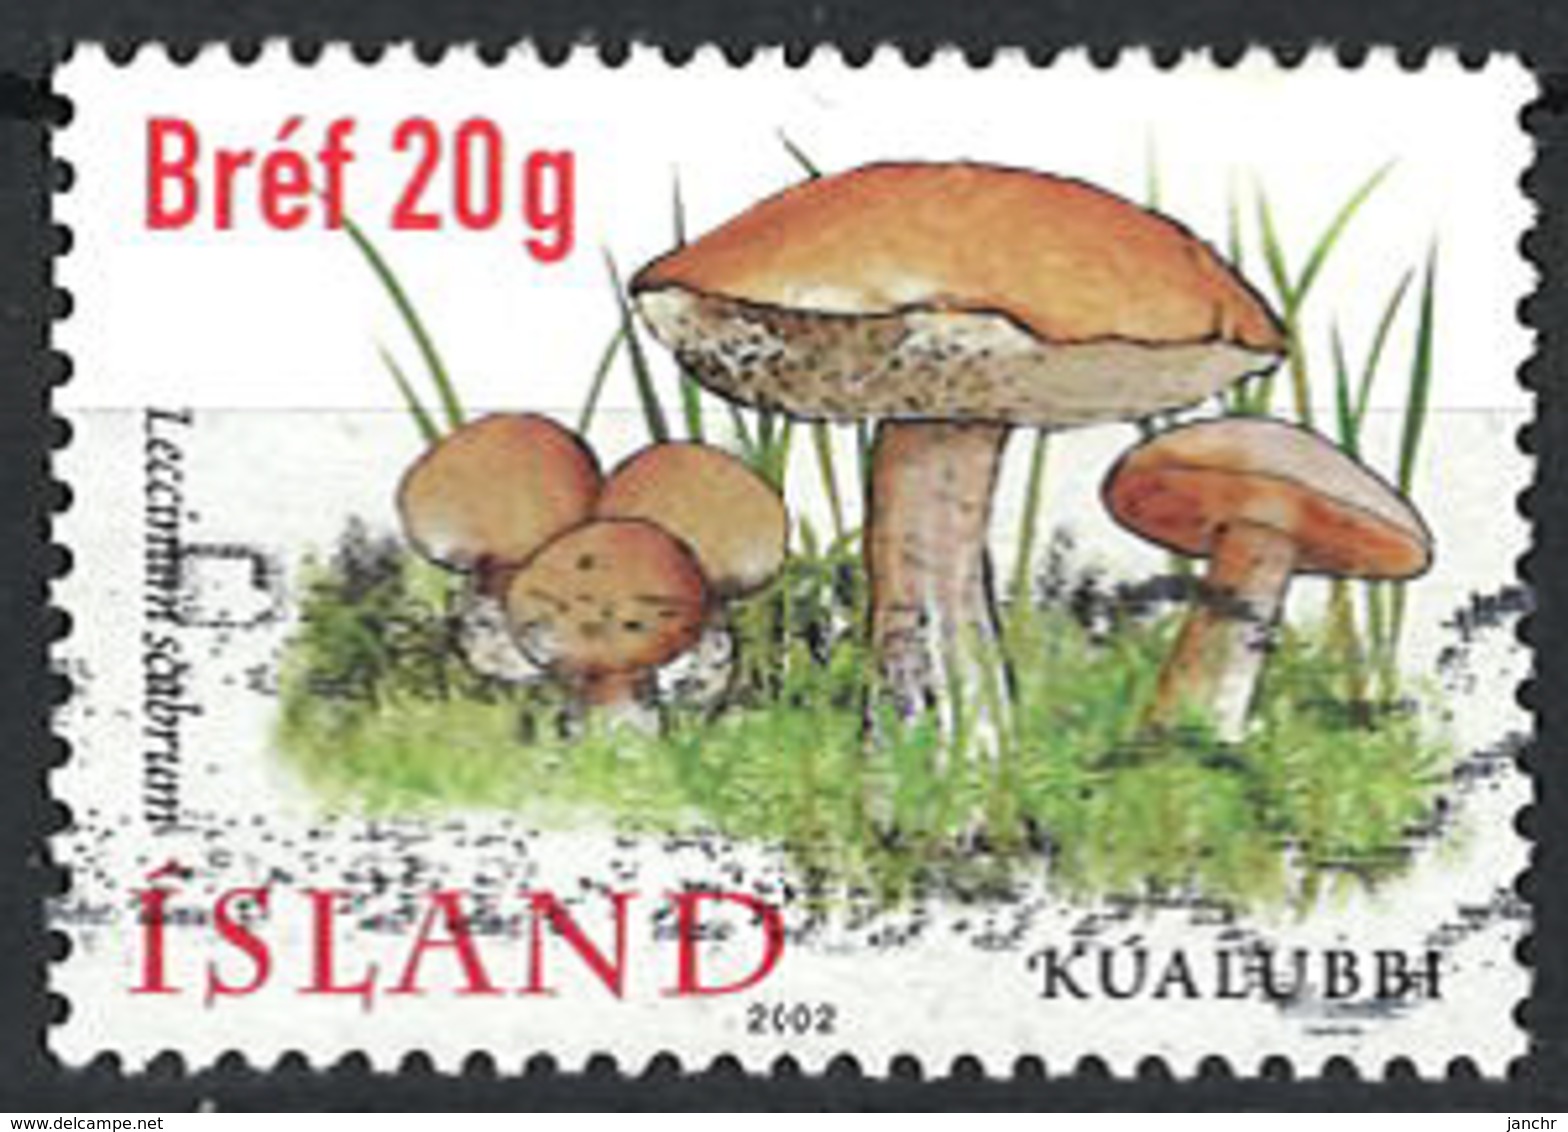 Iceland Island 2002. Mi 1000, Used O - Used Stamps